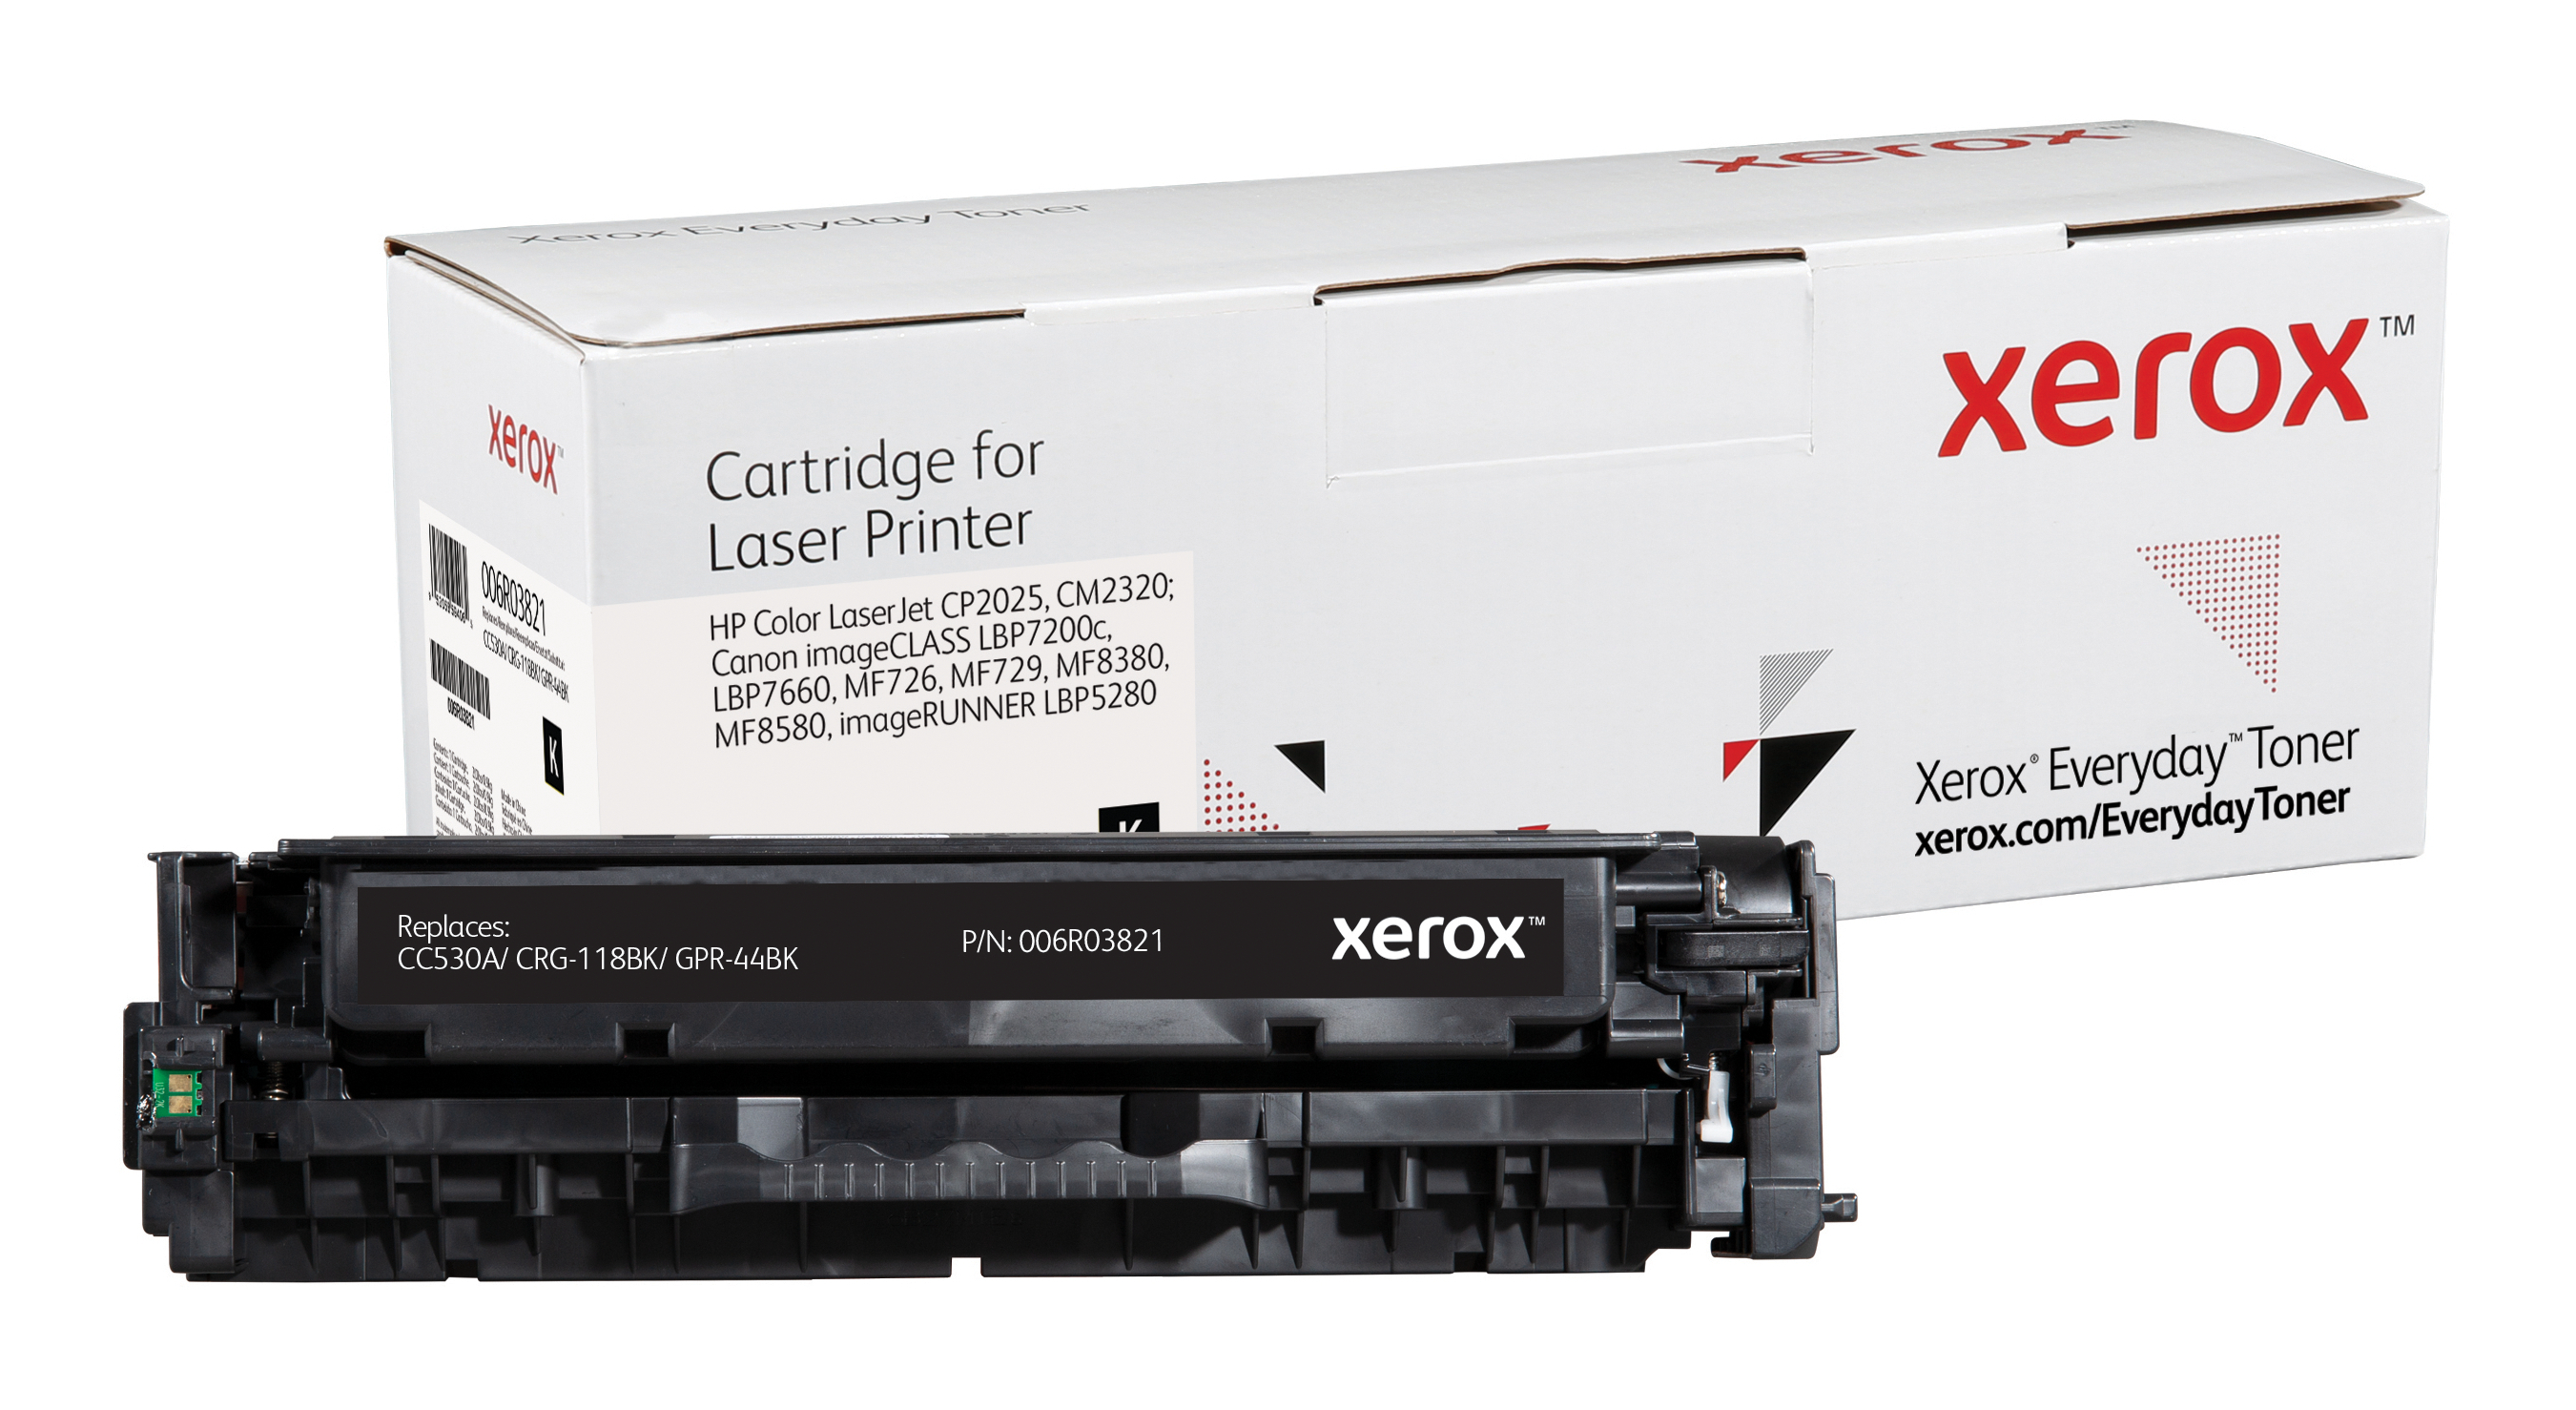 Xerox Everyday Zwart Toner vervangt de HP 304A (CC530A/ CRG-118BK/ GPR-44BK)